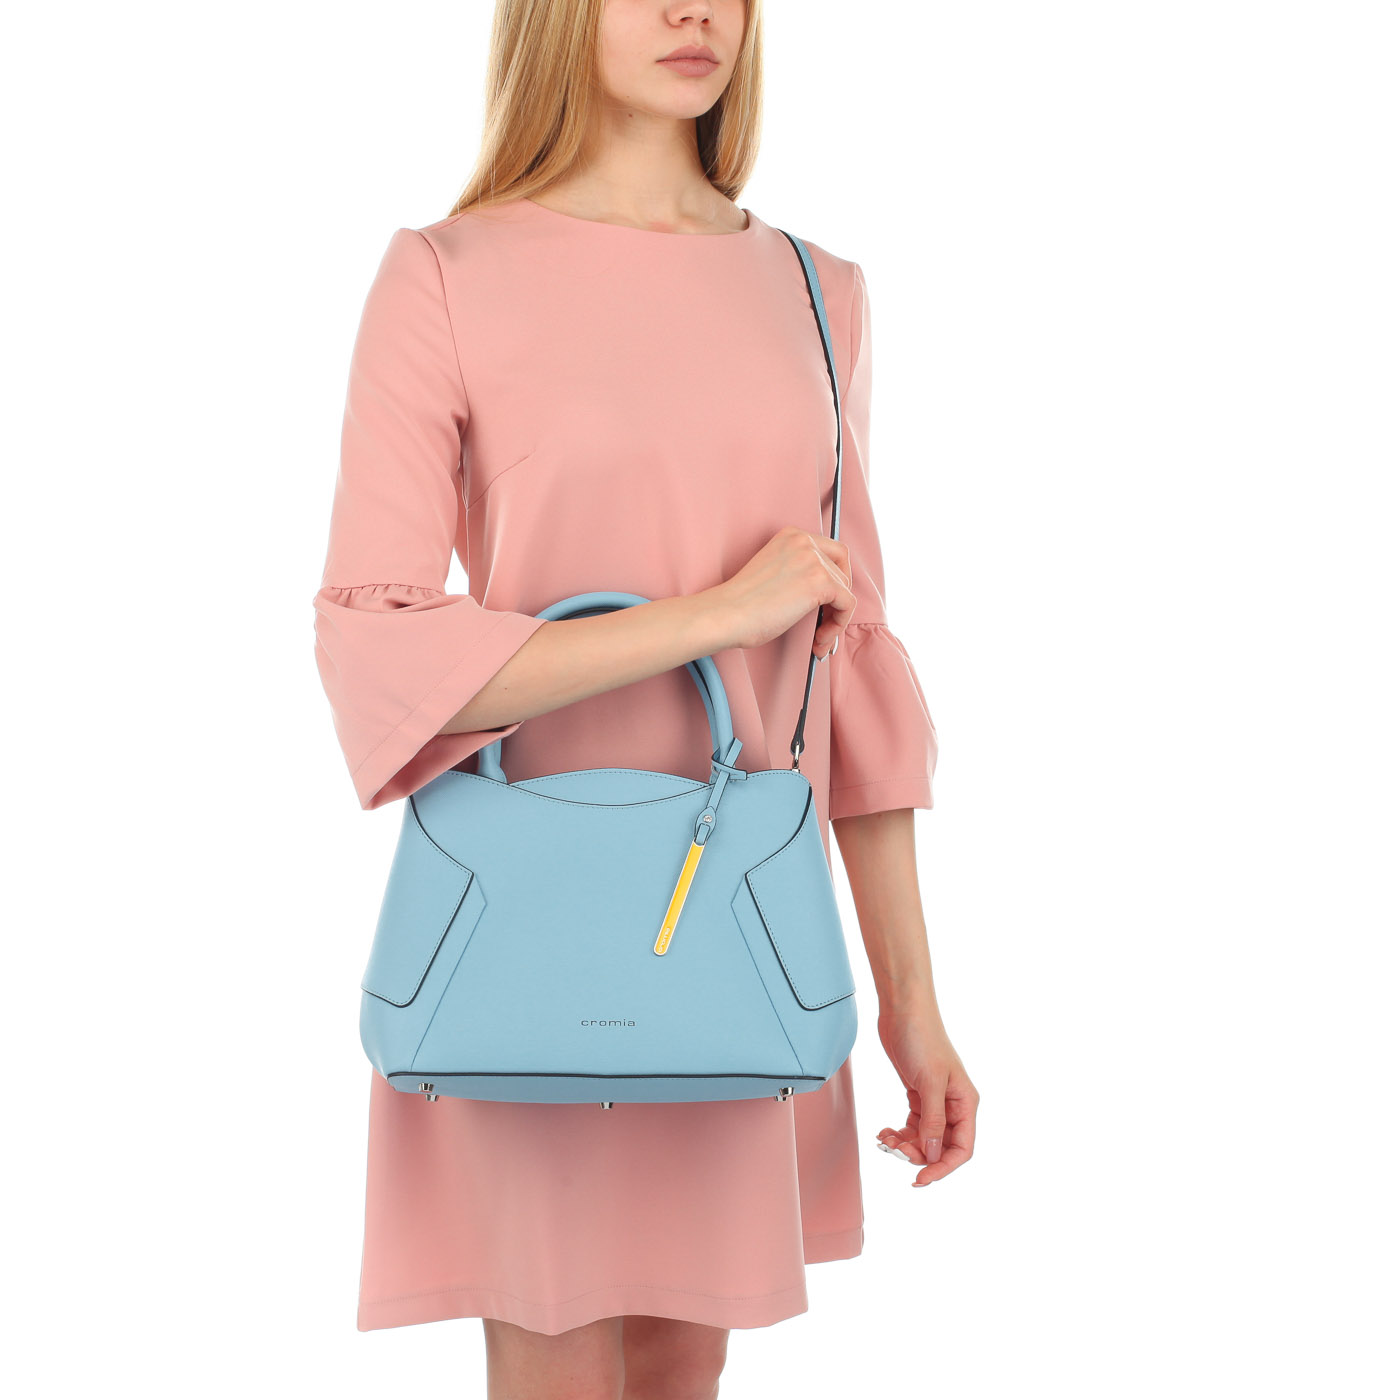 Женская сумка со съемным ремешком Cromia Wisper